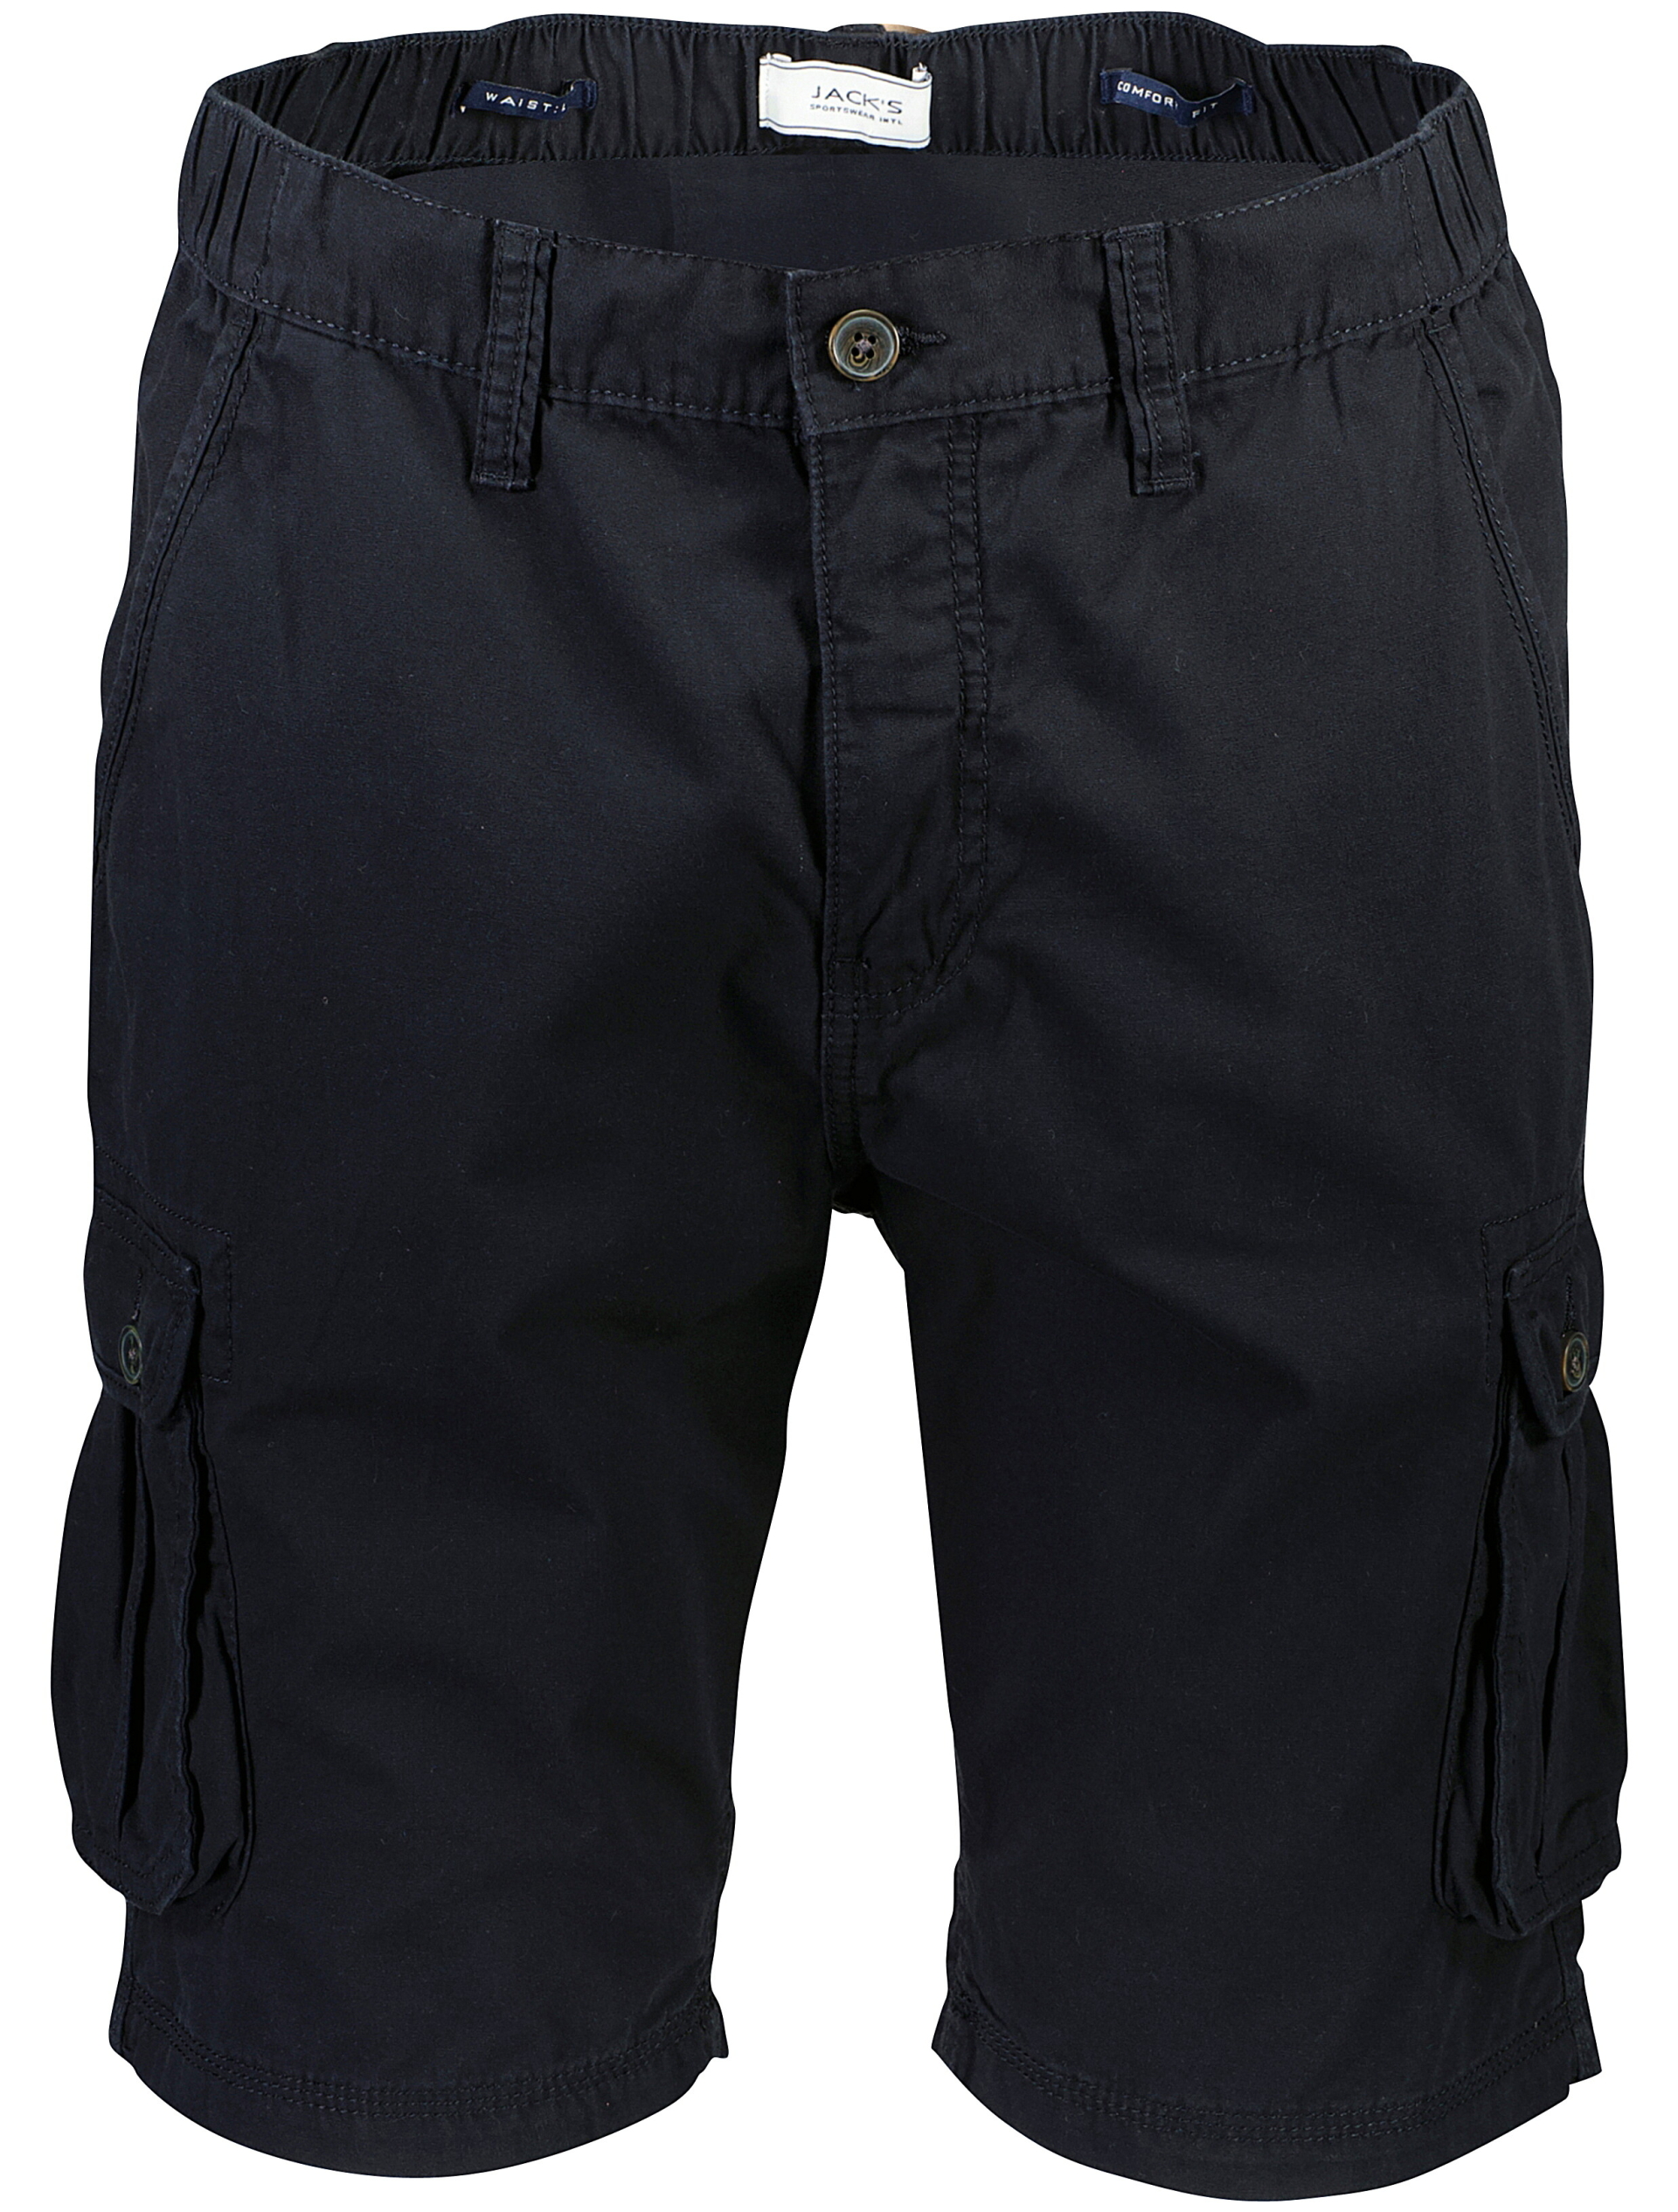 Morgan Cargo shorts sort / black